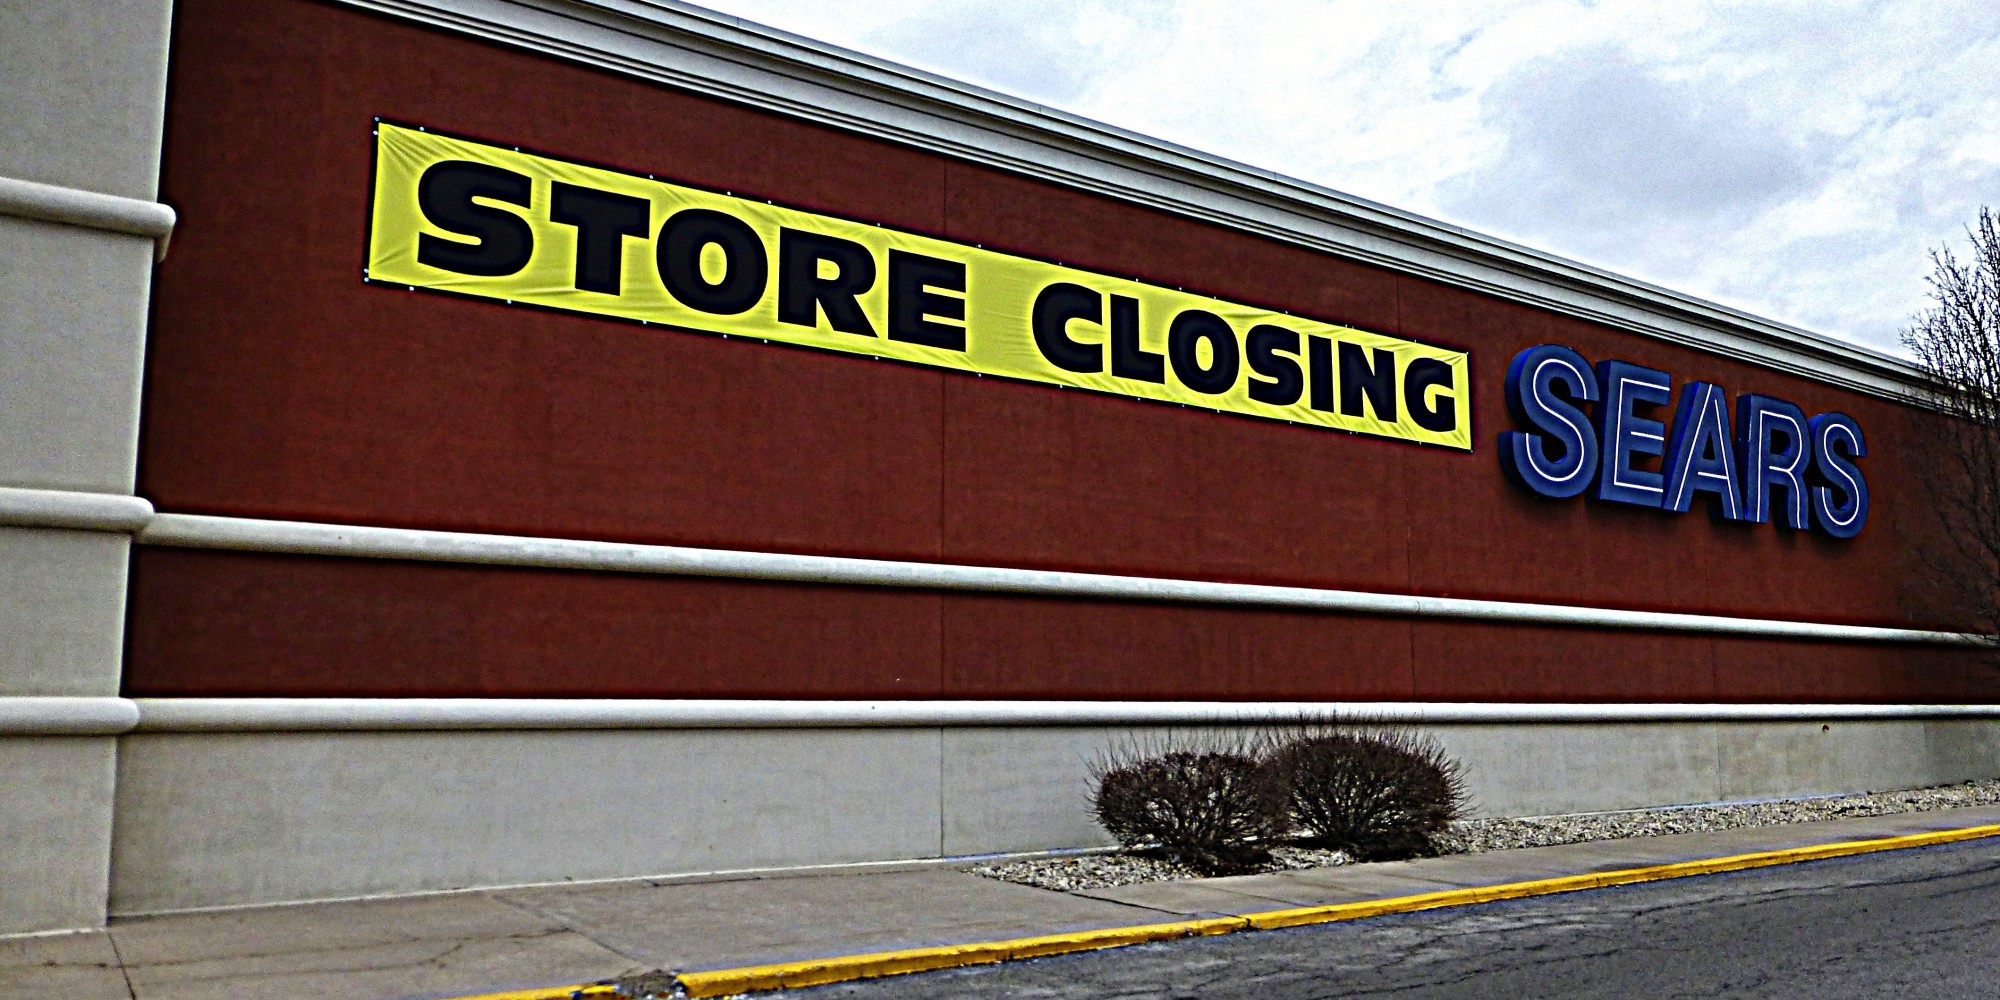 O-sears-store-closing-facebook